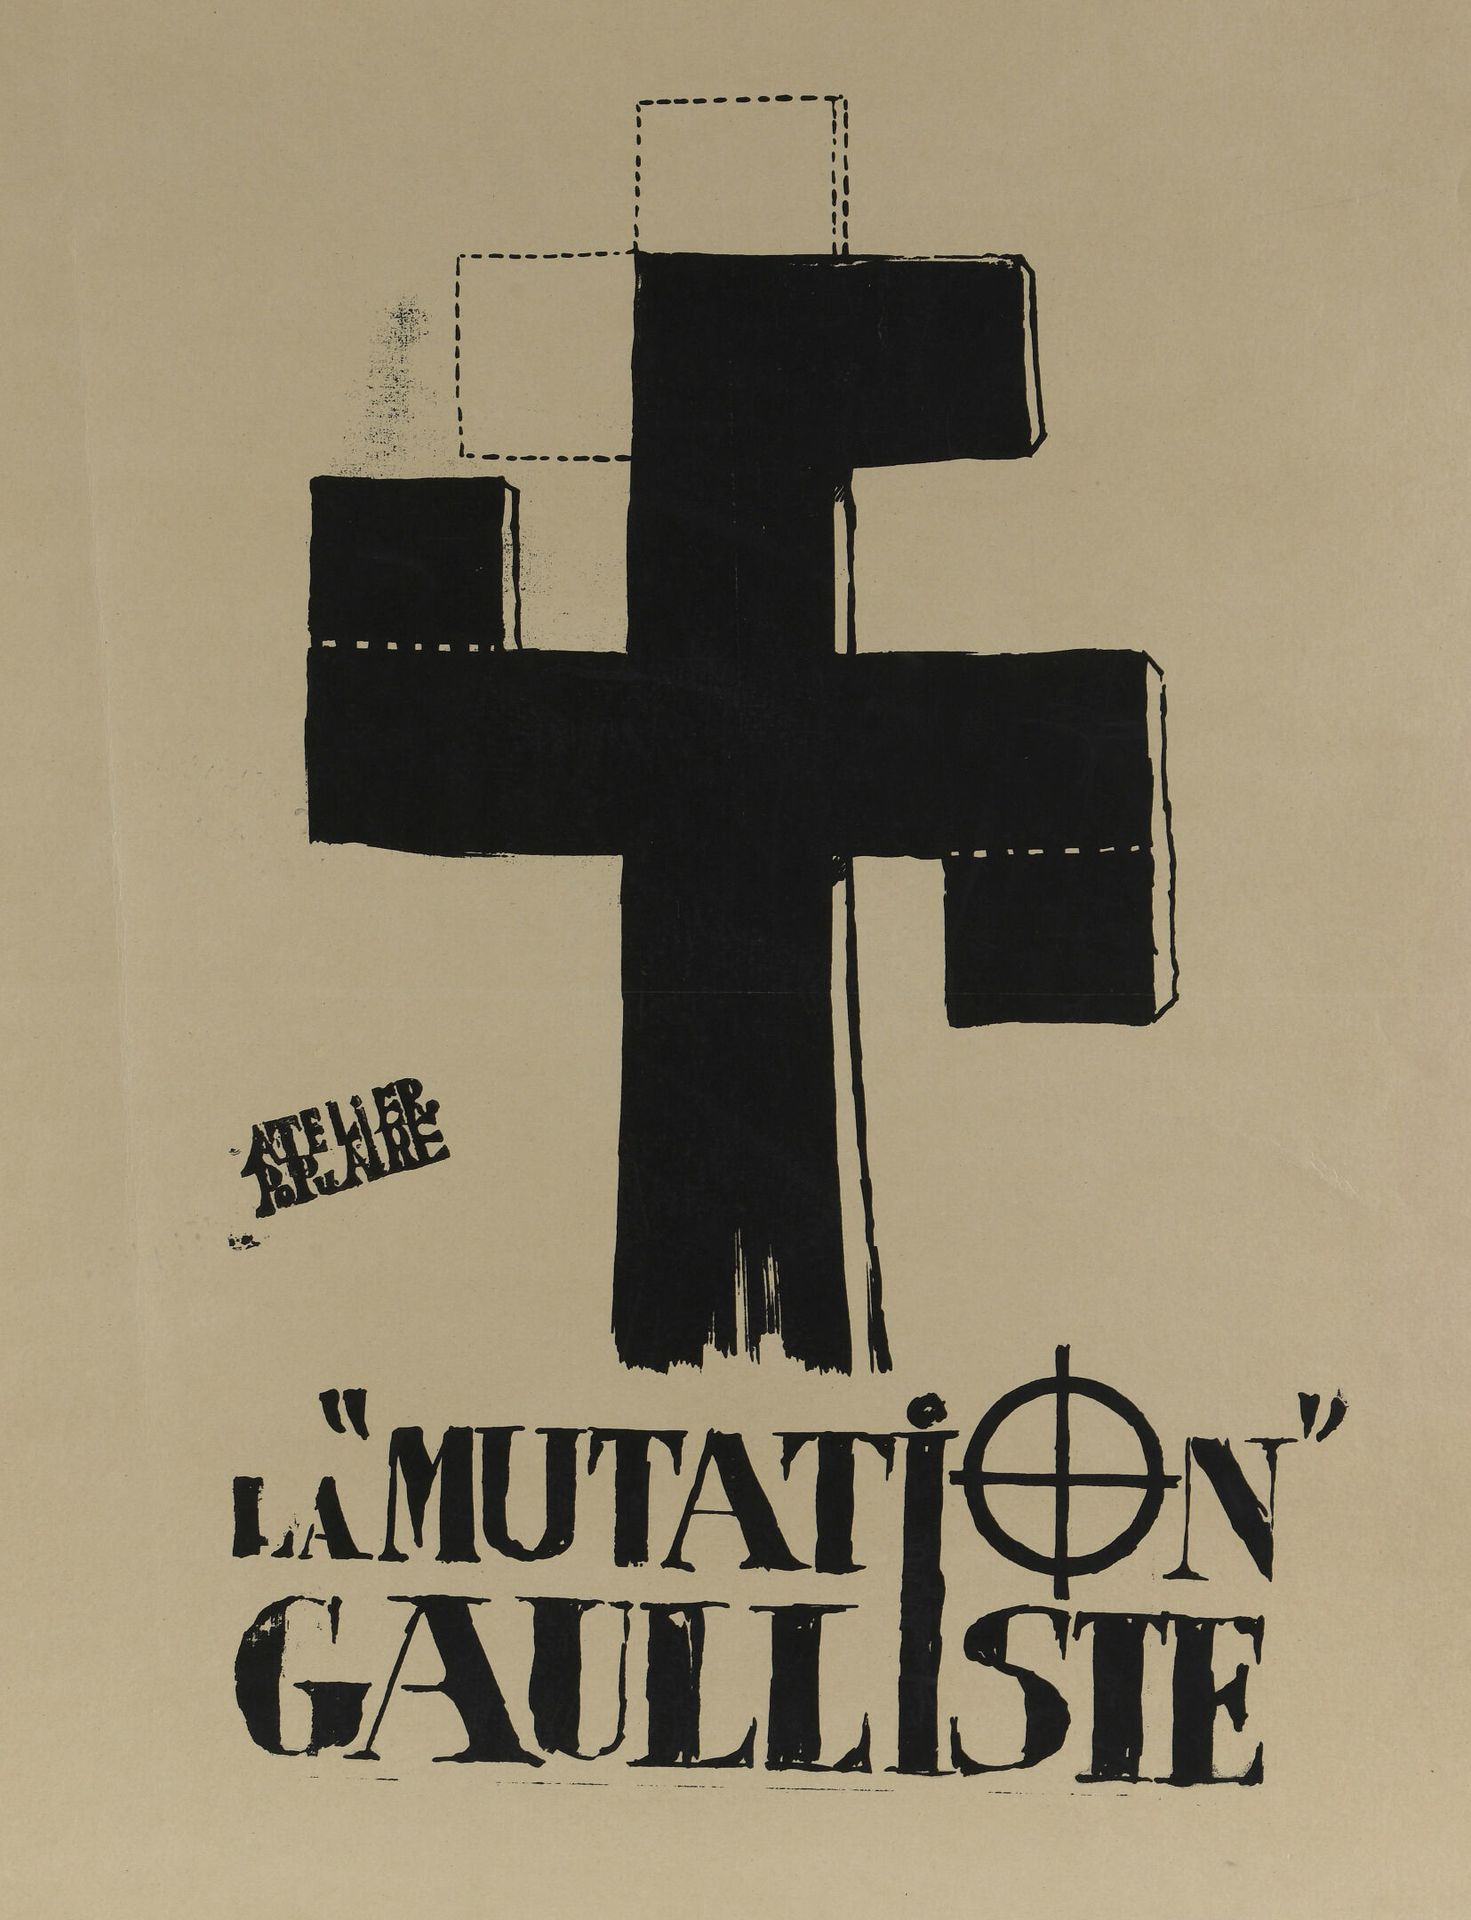 Null [Poster of May 1968]

Atelier Populaire

The Gaullist mutation

Silkscreen &hellip;